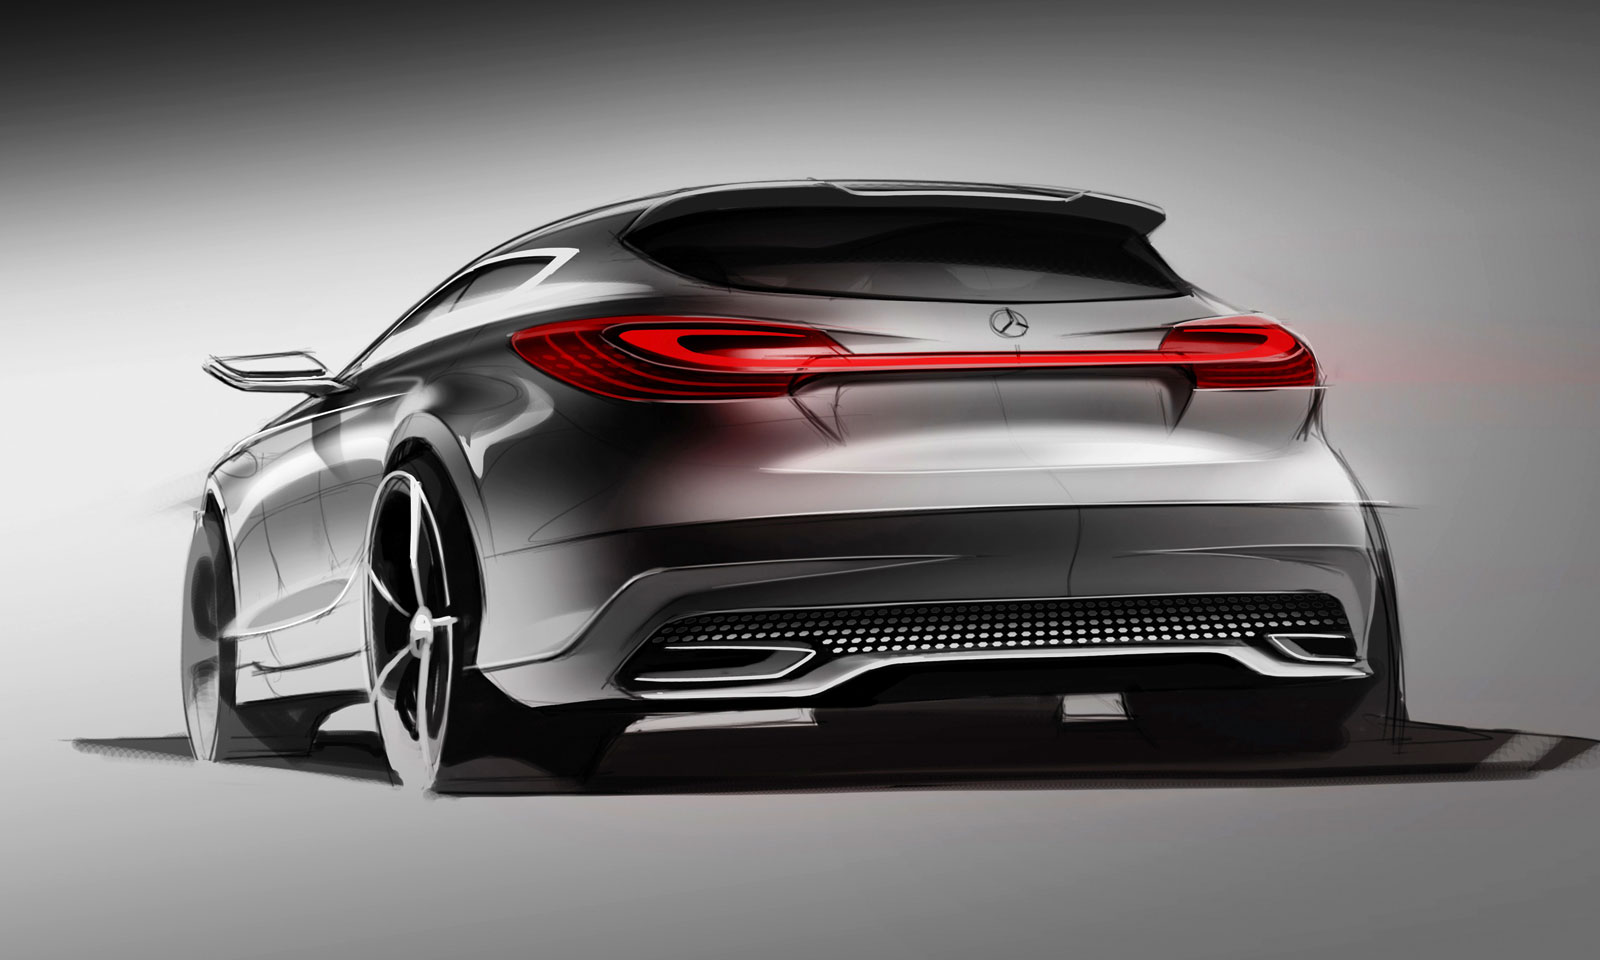 02_Mercedes-Benz-Concept-A-Class-Design-Sketch-02